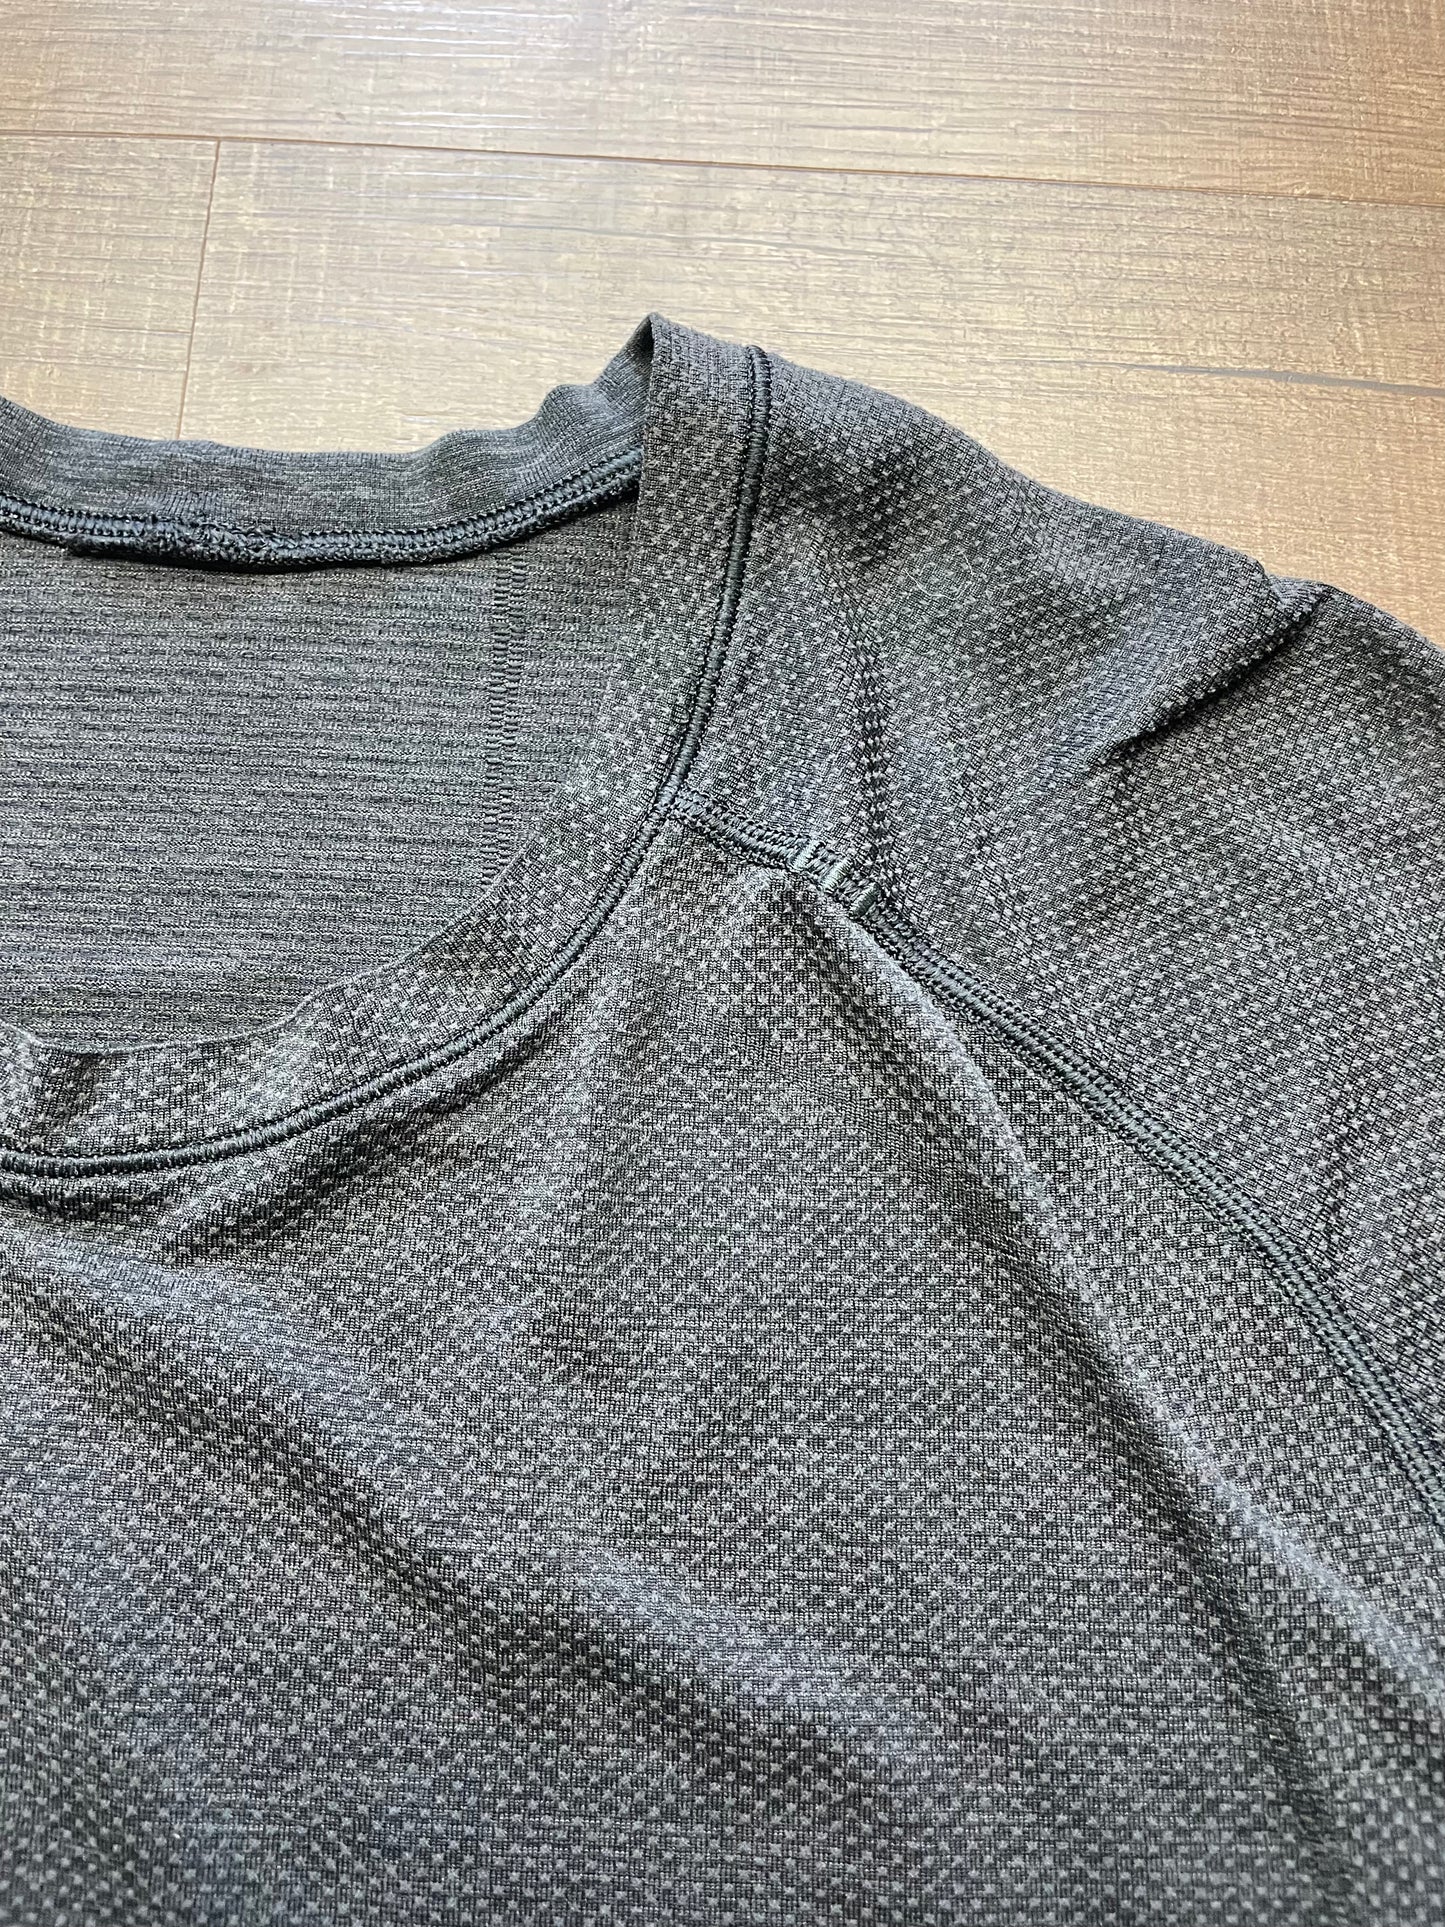 Lululemon Men's Metal Vent Tech Short Sleeved Shirt Gray (M)